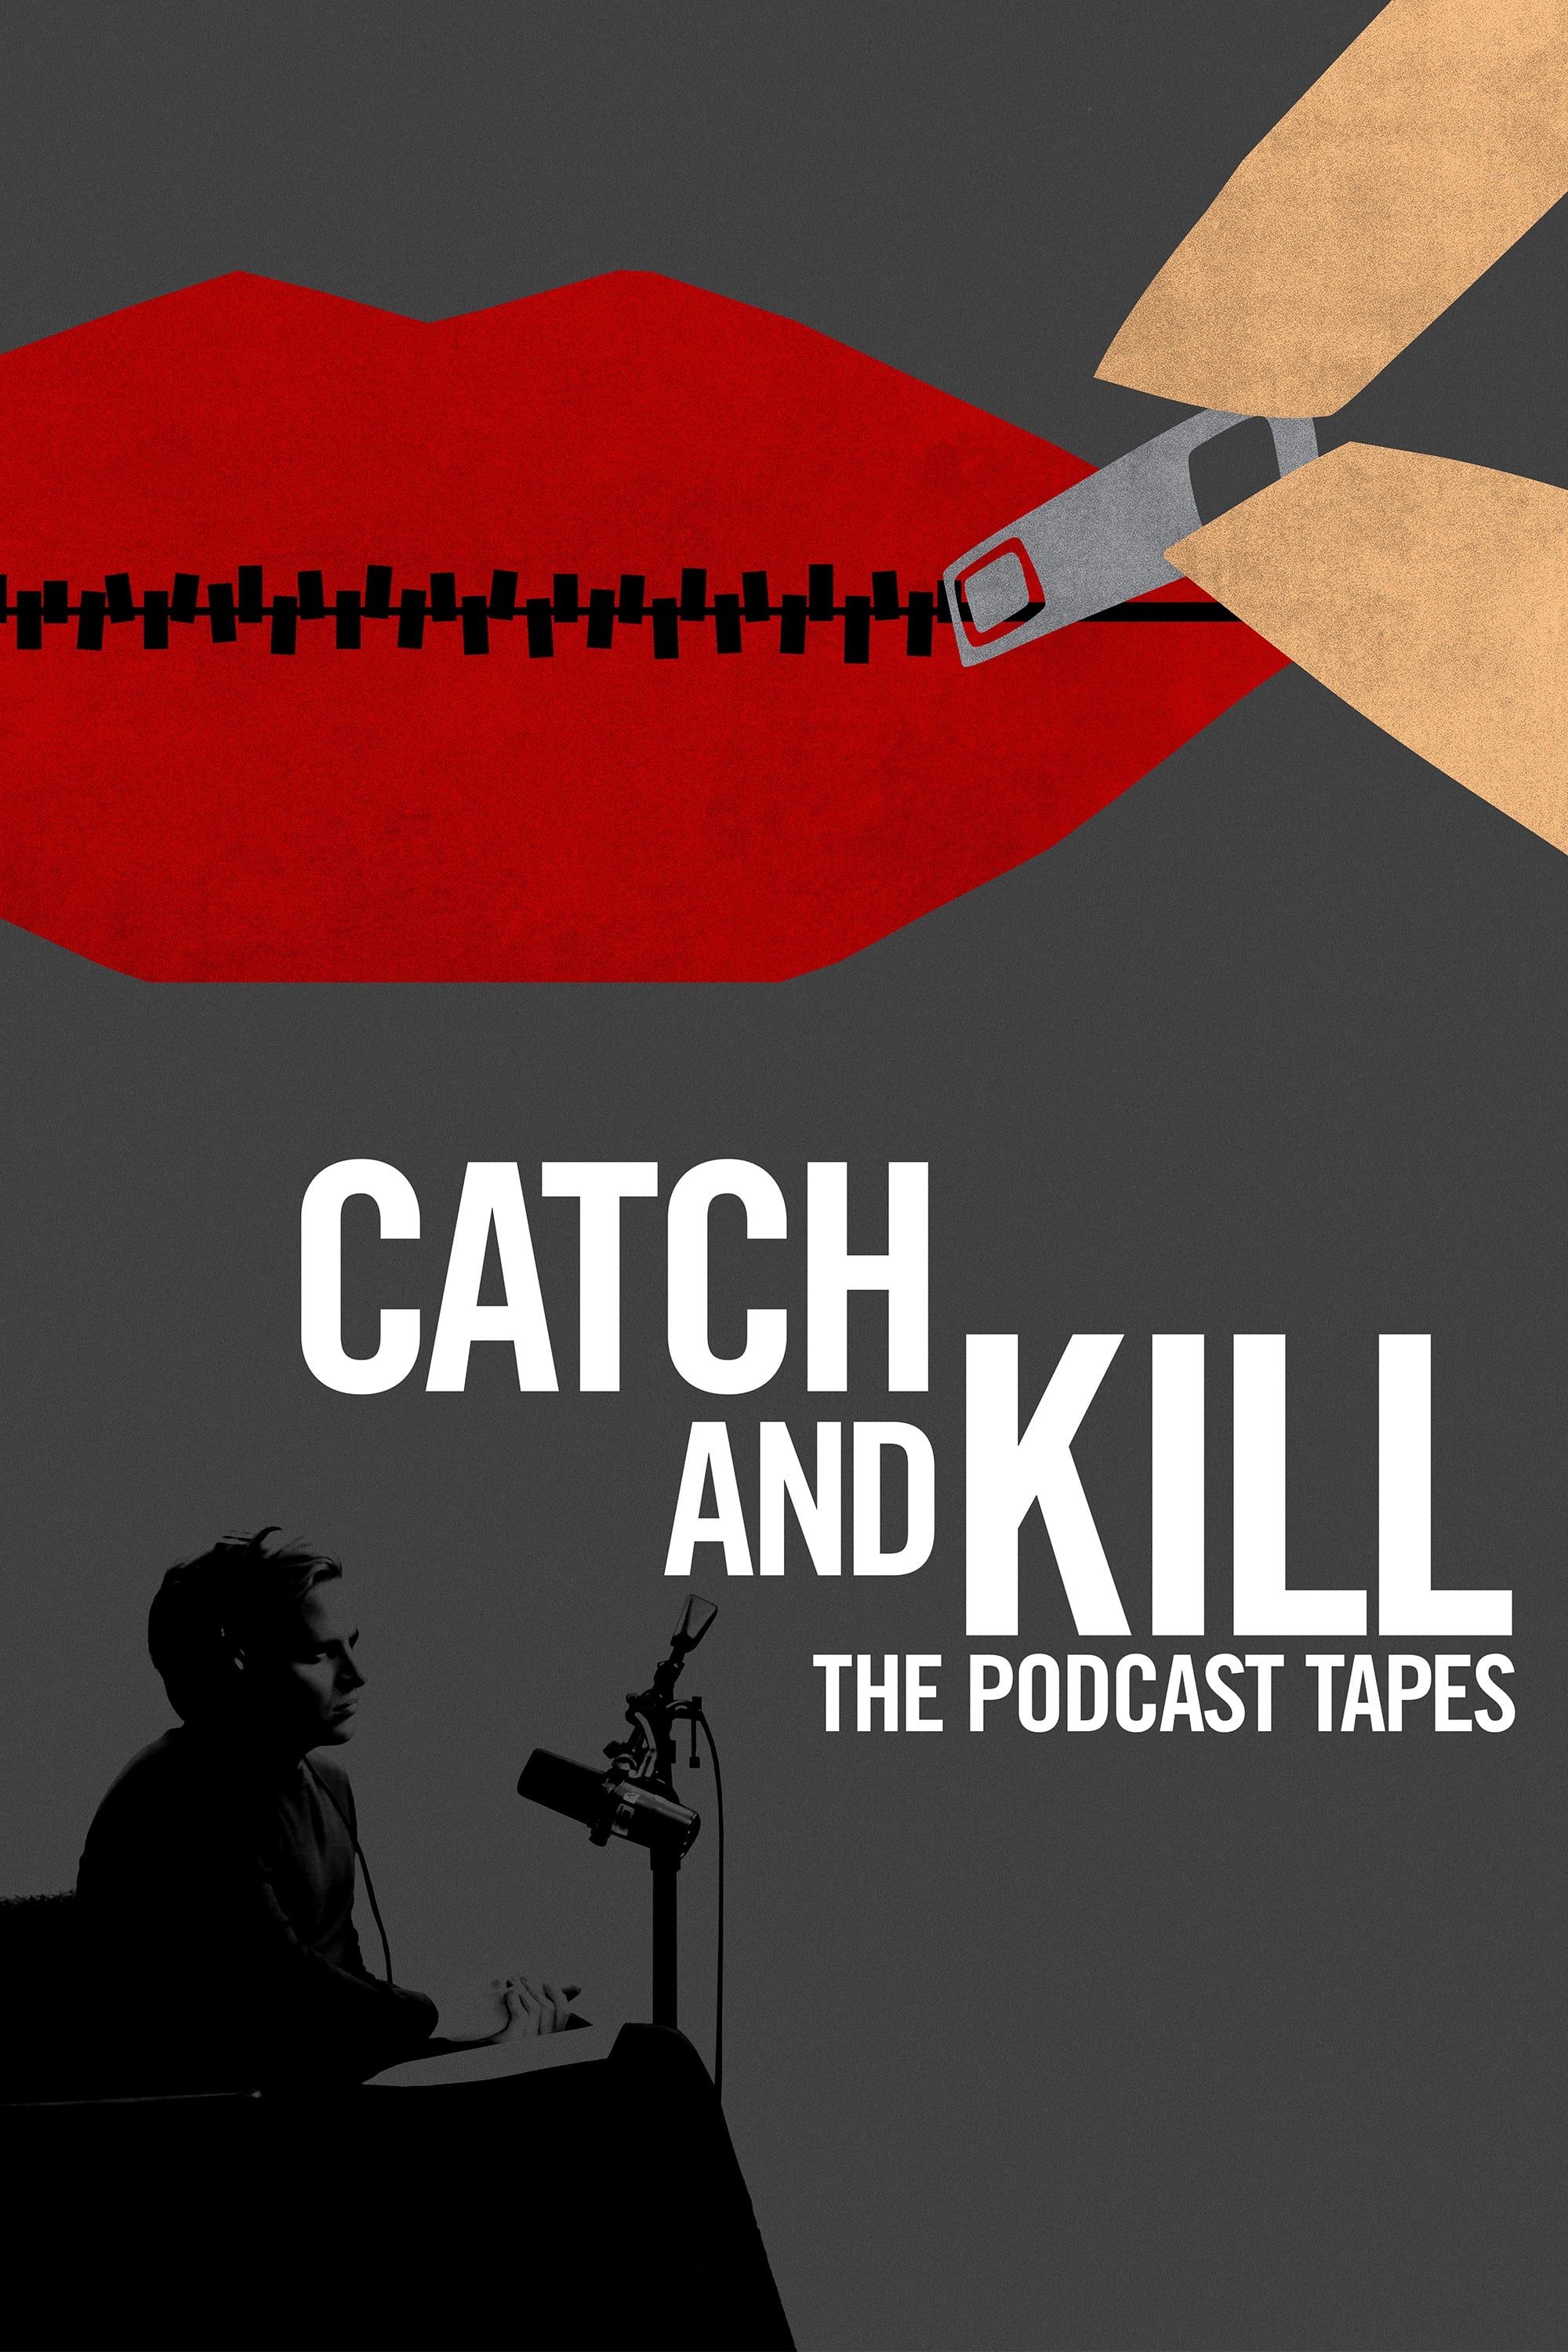 Caratula de Catch and Kill: The Podcast Tapes (Catch and Kill) 